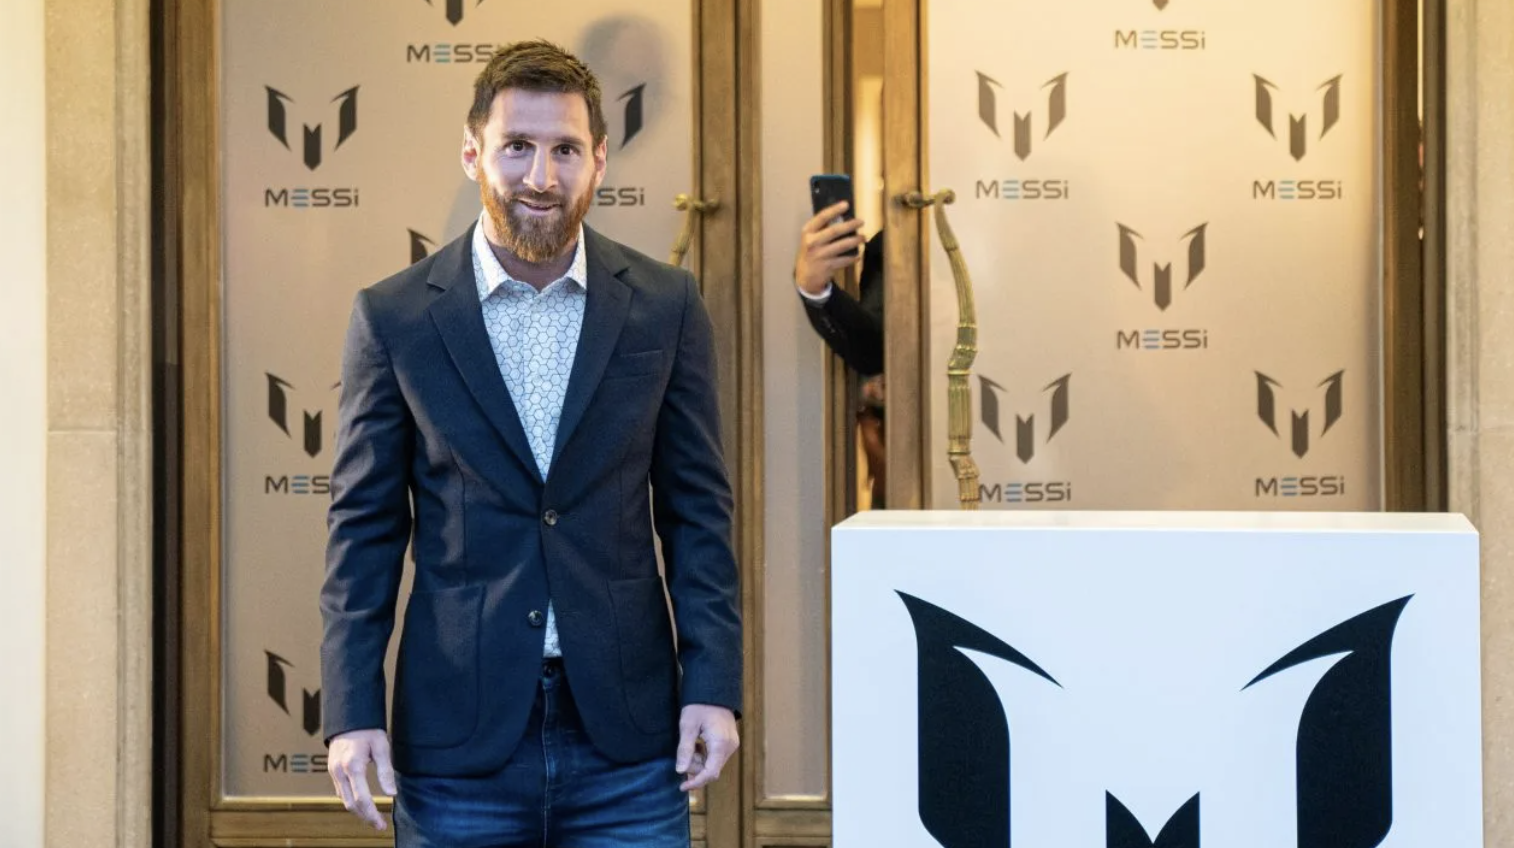 梅西个人品牌The Messi Brand将在本周IPO 市值预计6600万美元